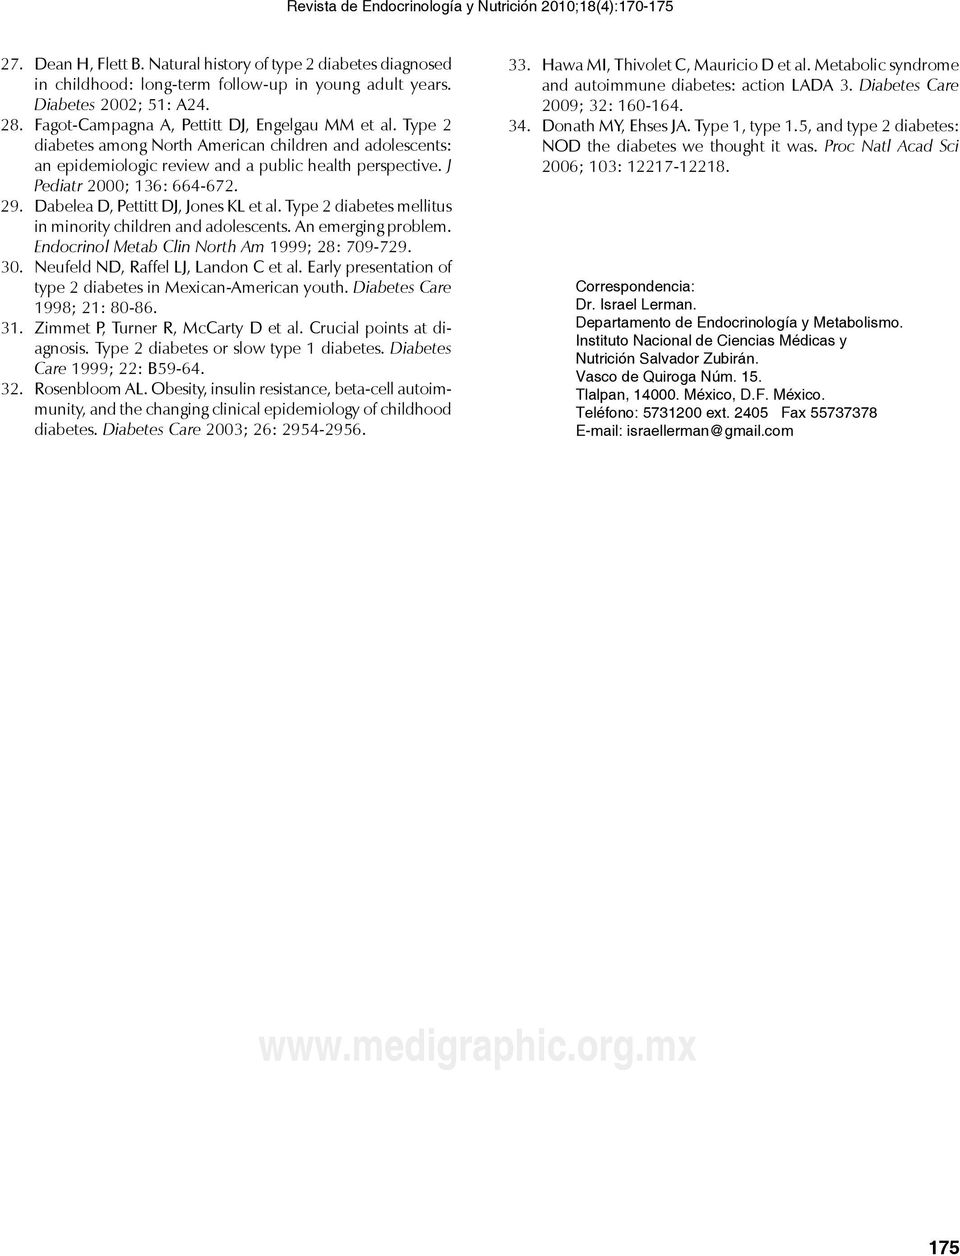 J Pediatr 2000; 136: 664-672. 29. Dabelea D, Pettitt DJ, Jones KL et al. Type 2 diabetes mellitus in minority children and adolescents. An emerging problem.